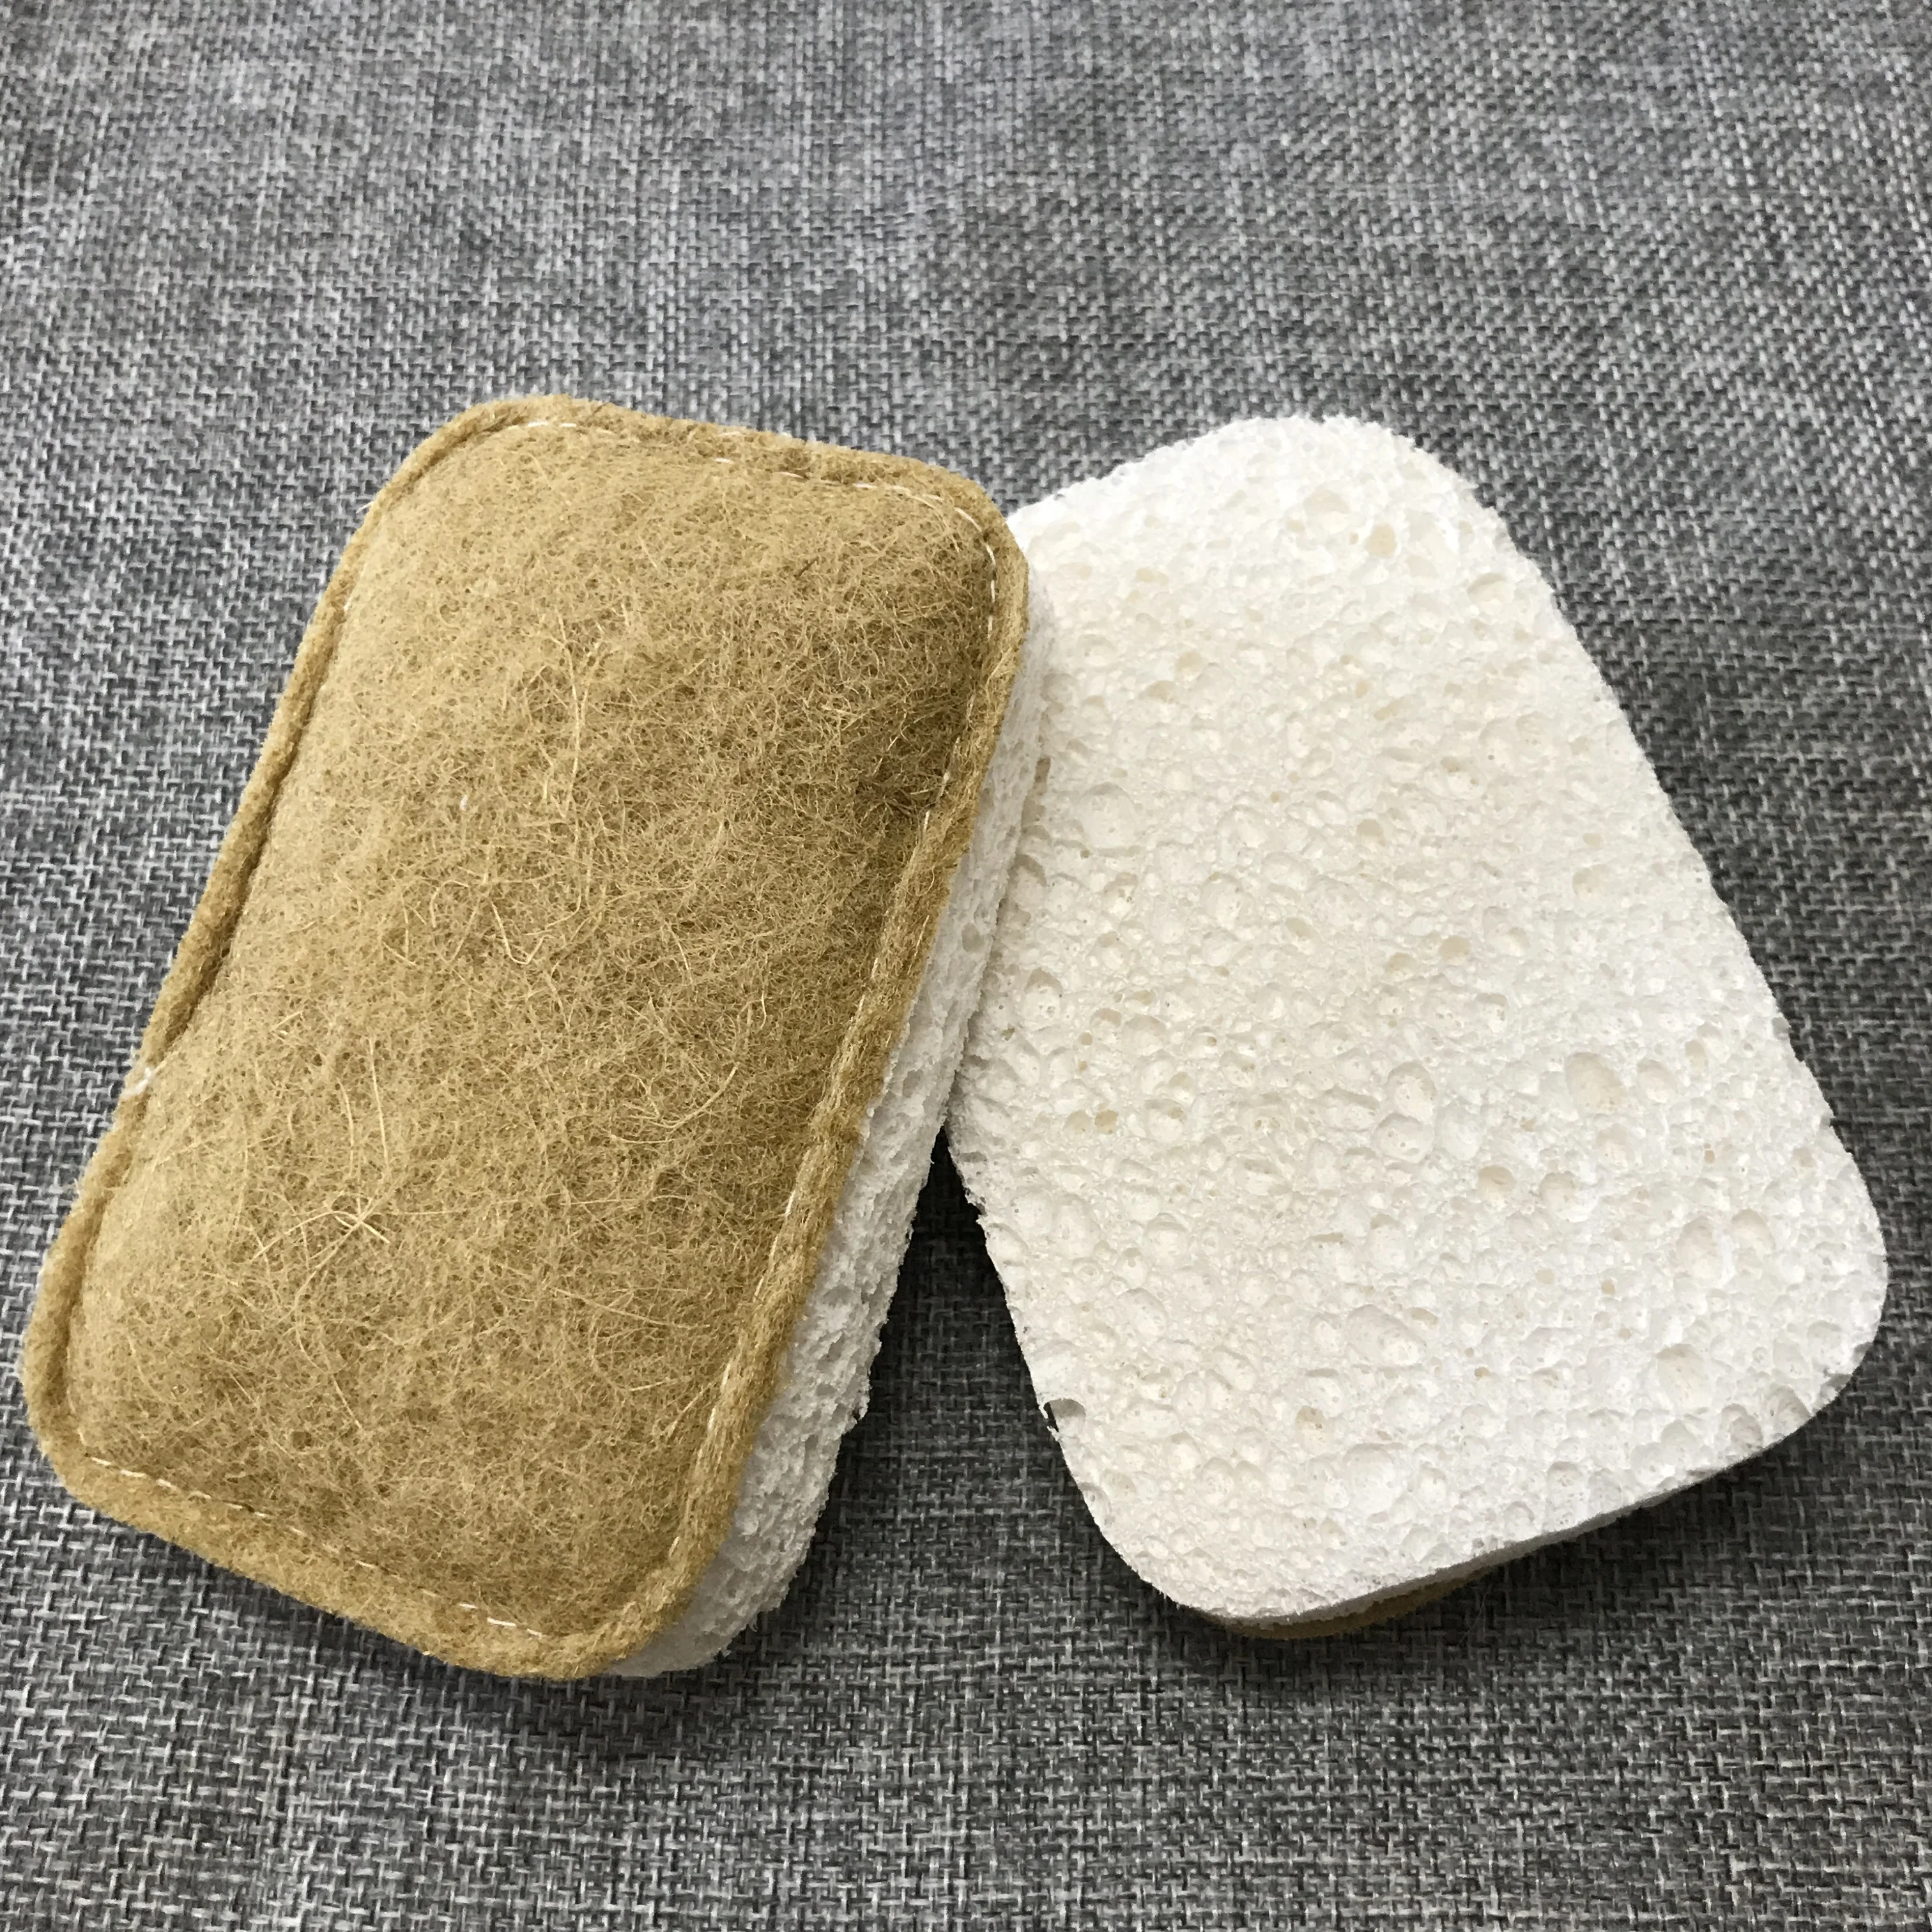 CK020-1 Absorbent Dishcloth Cellulose Sponge Wood Cloths 7*11cm Sisal Scrub Dishwashing Cellulose Cleaning Sponges